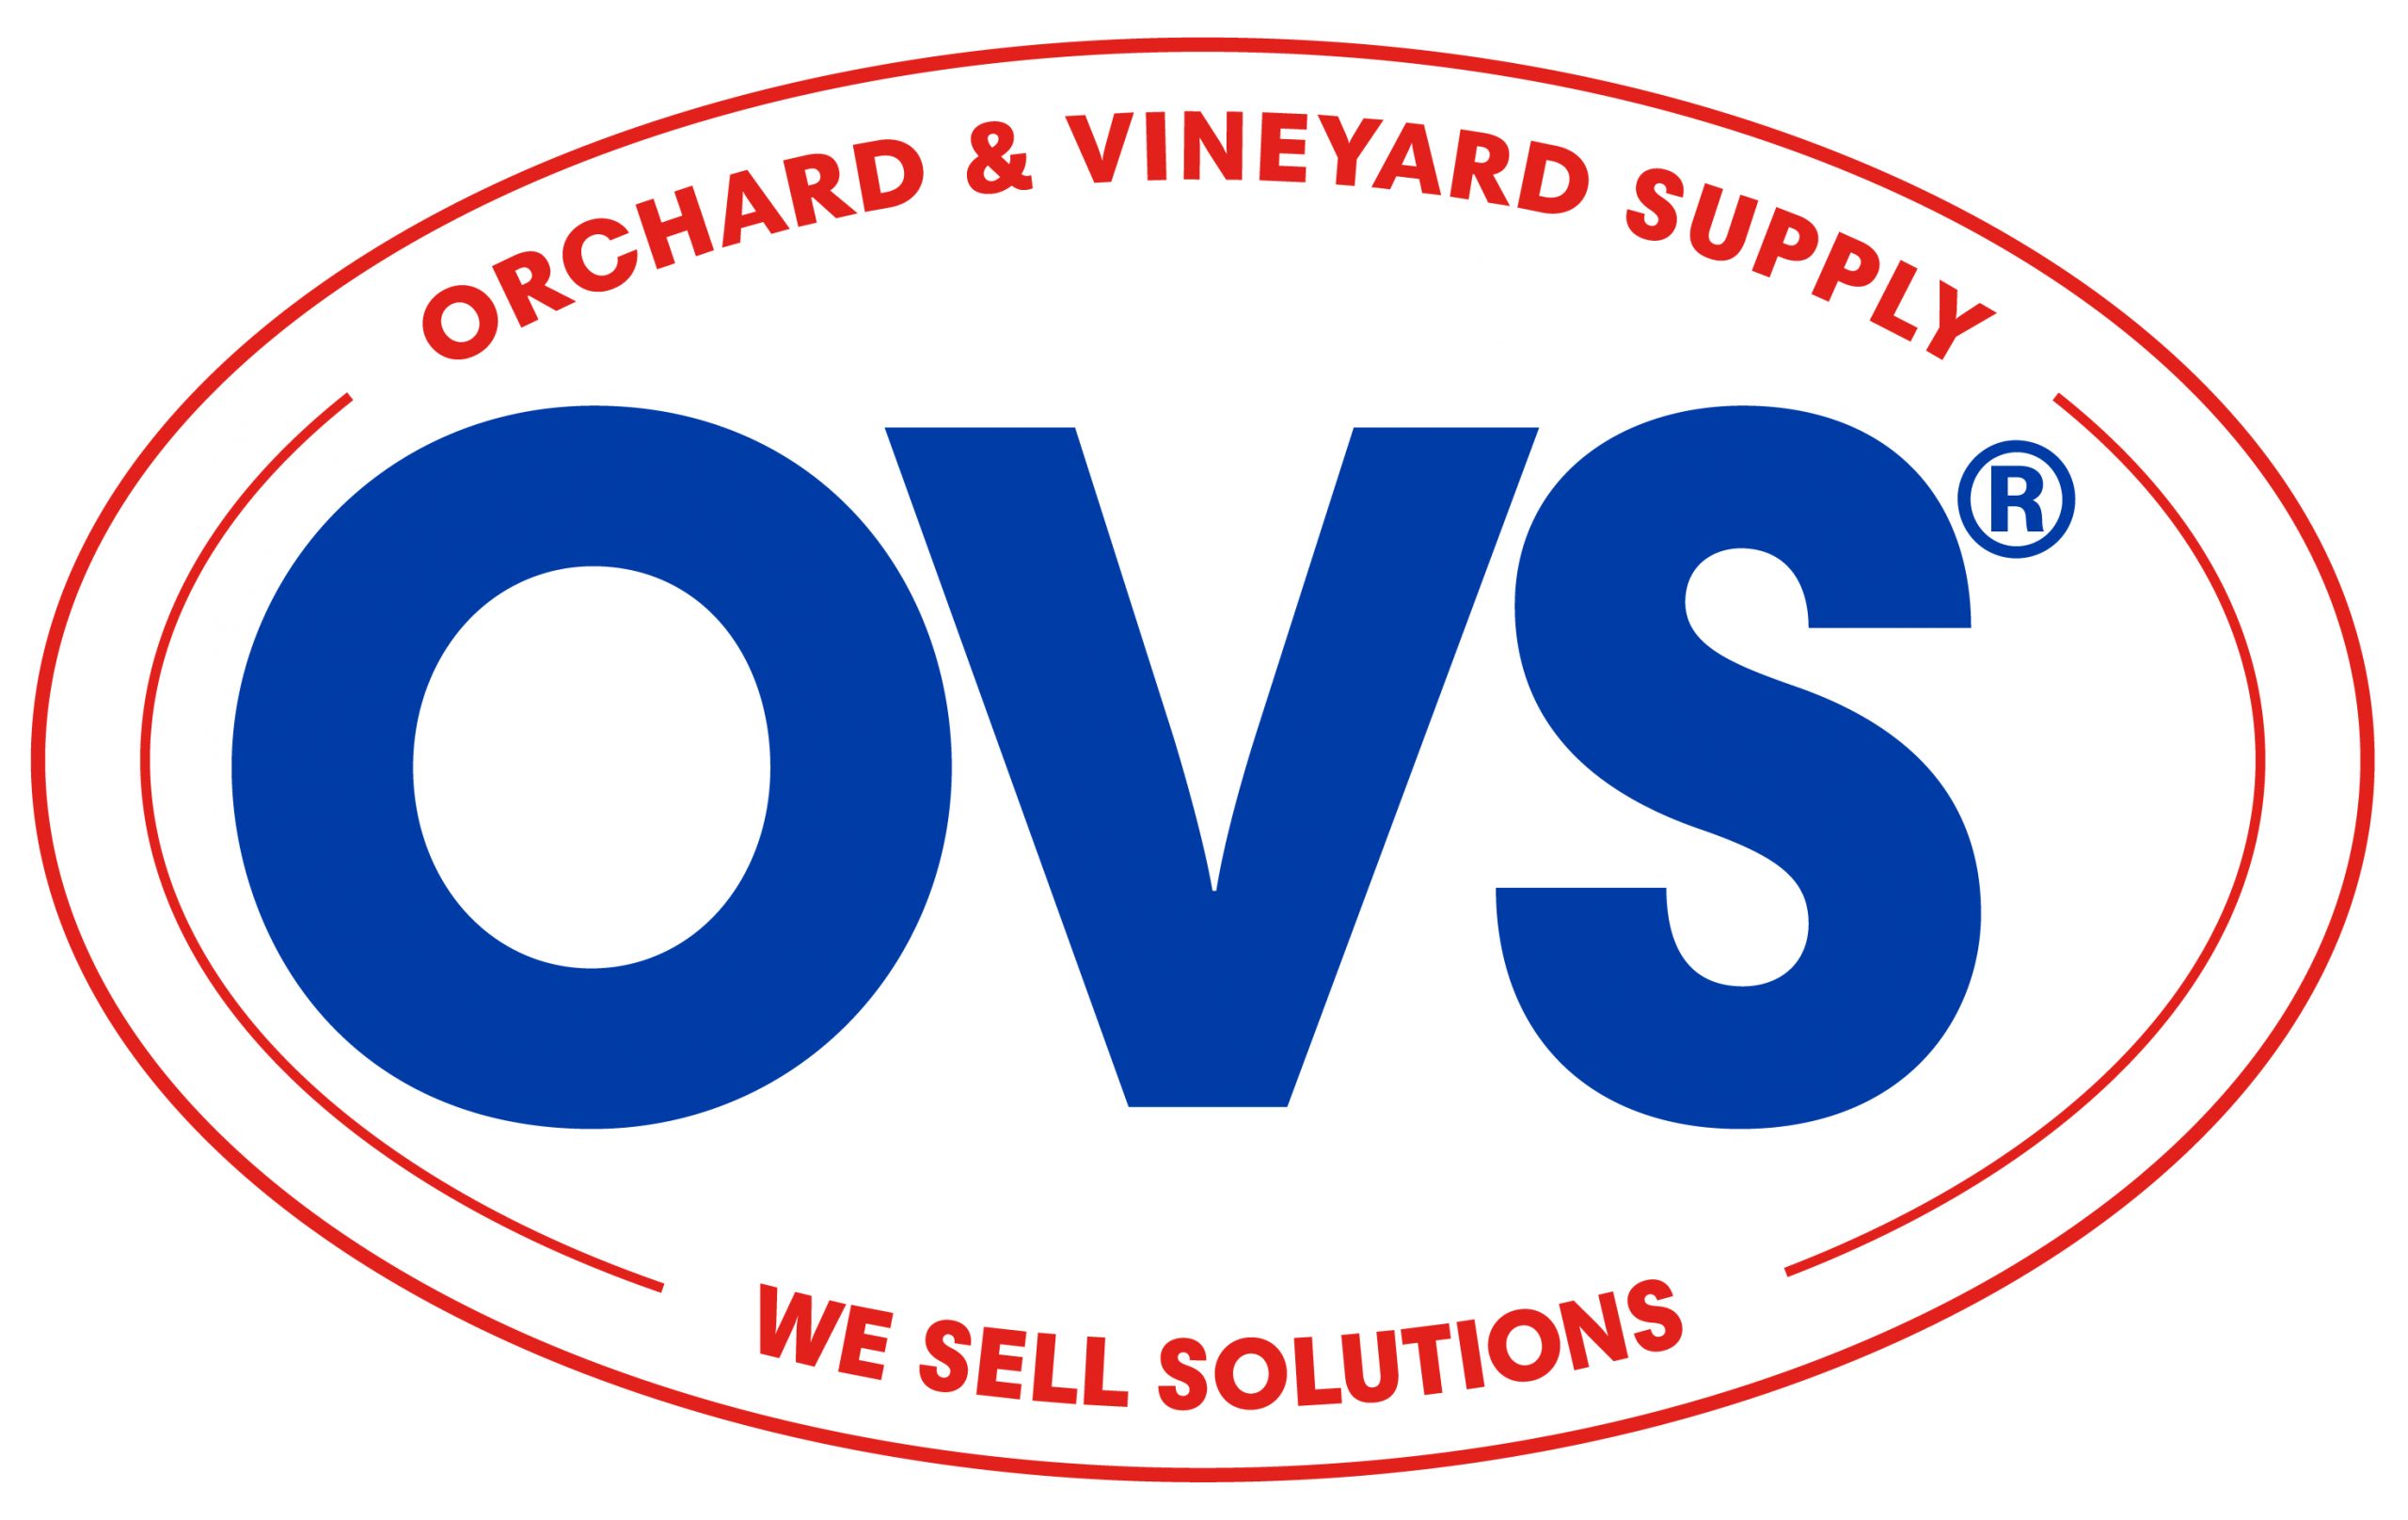 Orchard and Vineyard Supply logo